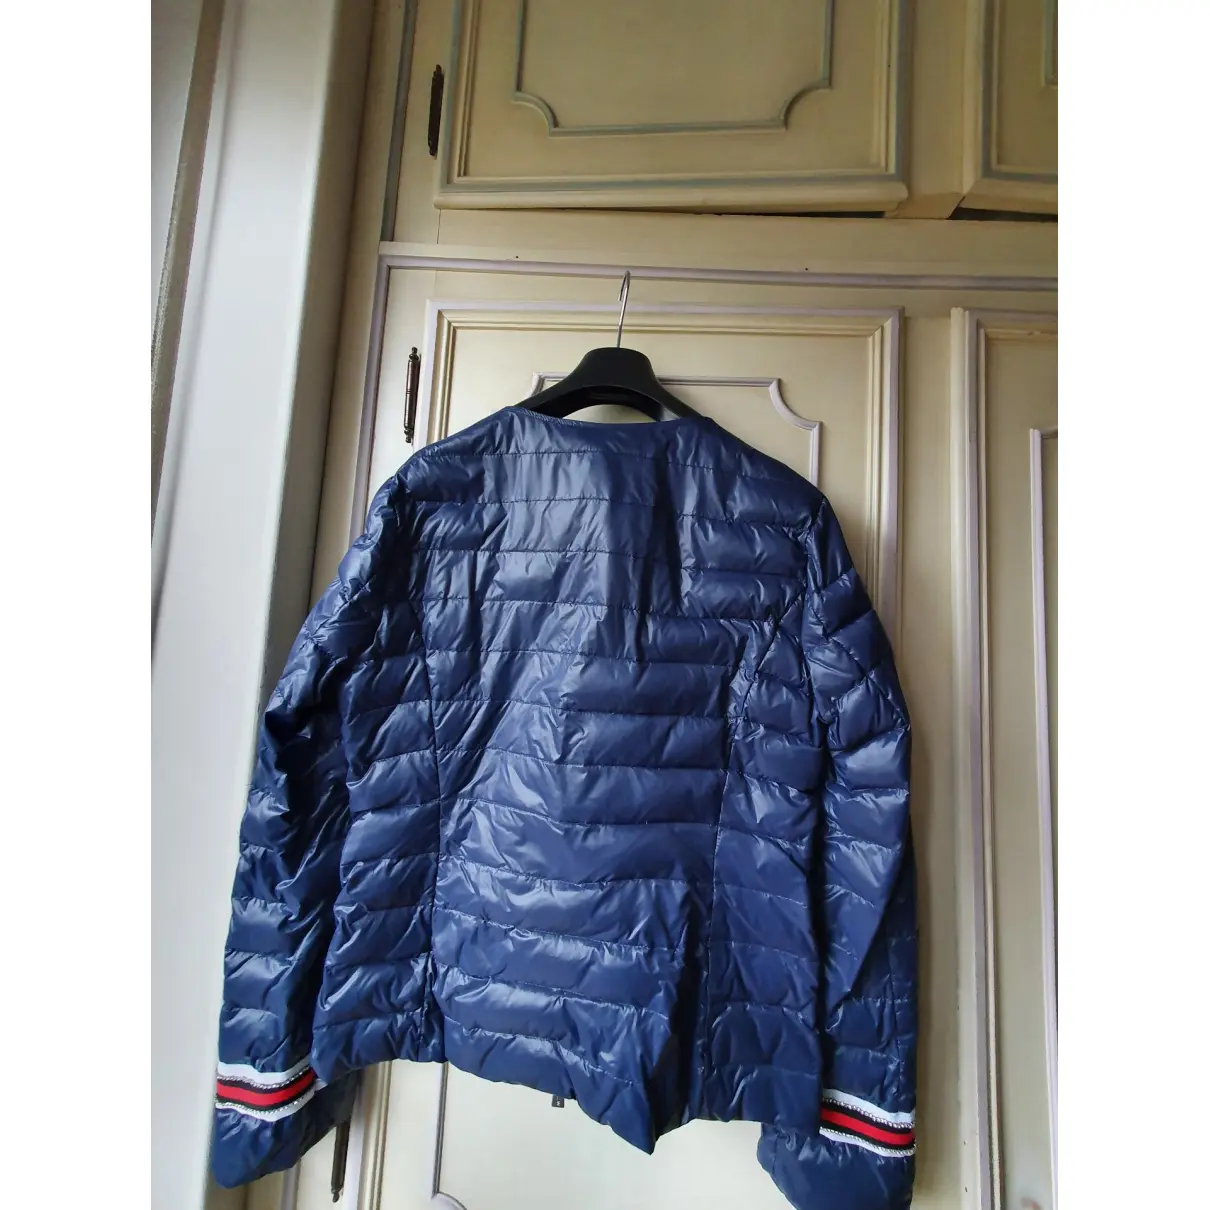 Buy Flavio Castellani Blue Polyester Jacket online